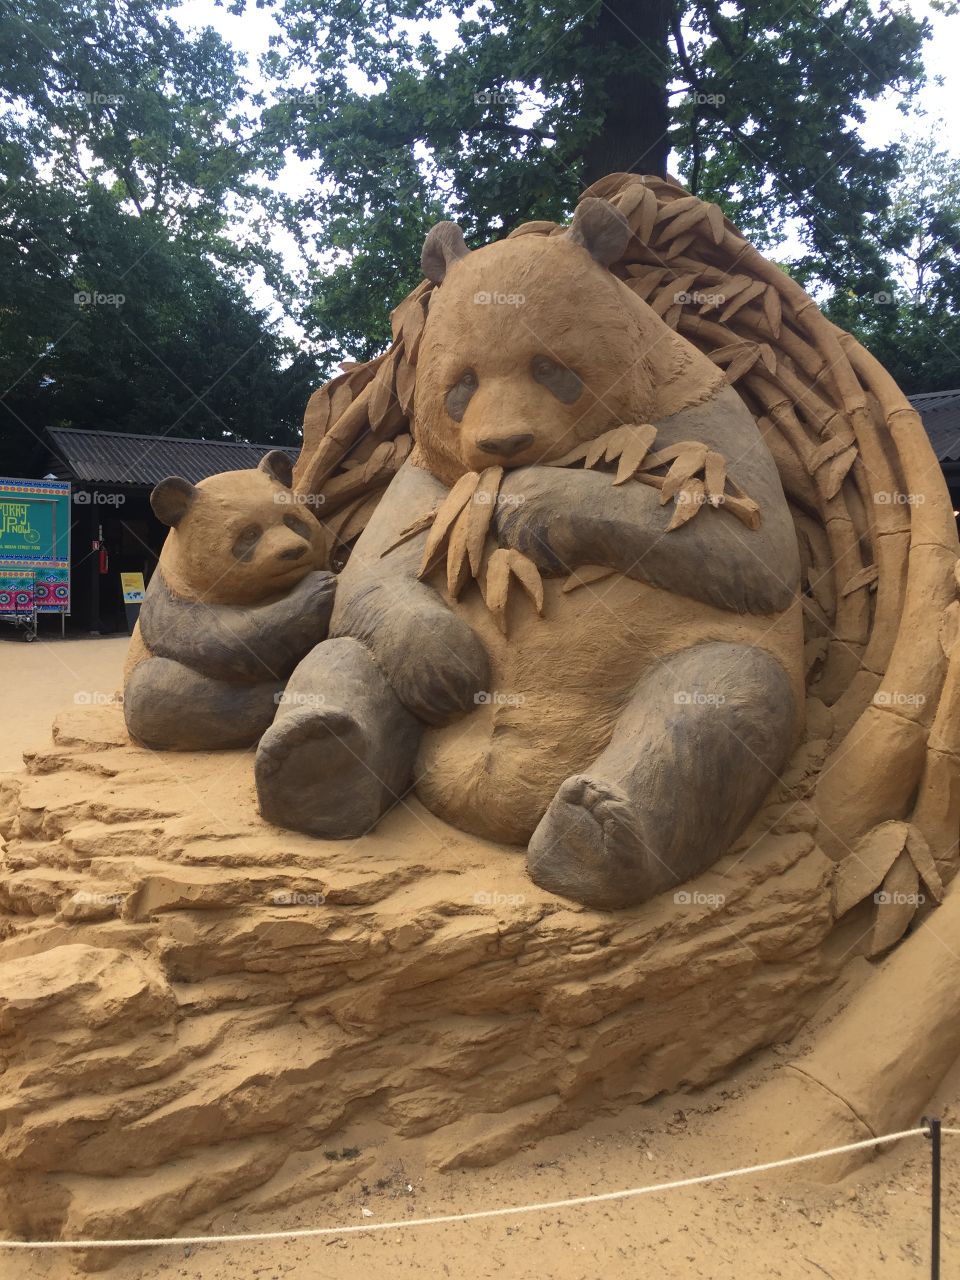 Panda sand sculpture in denmark